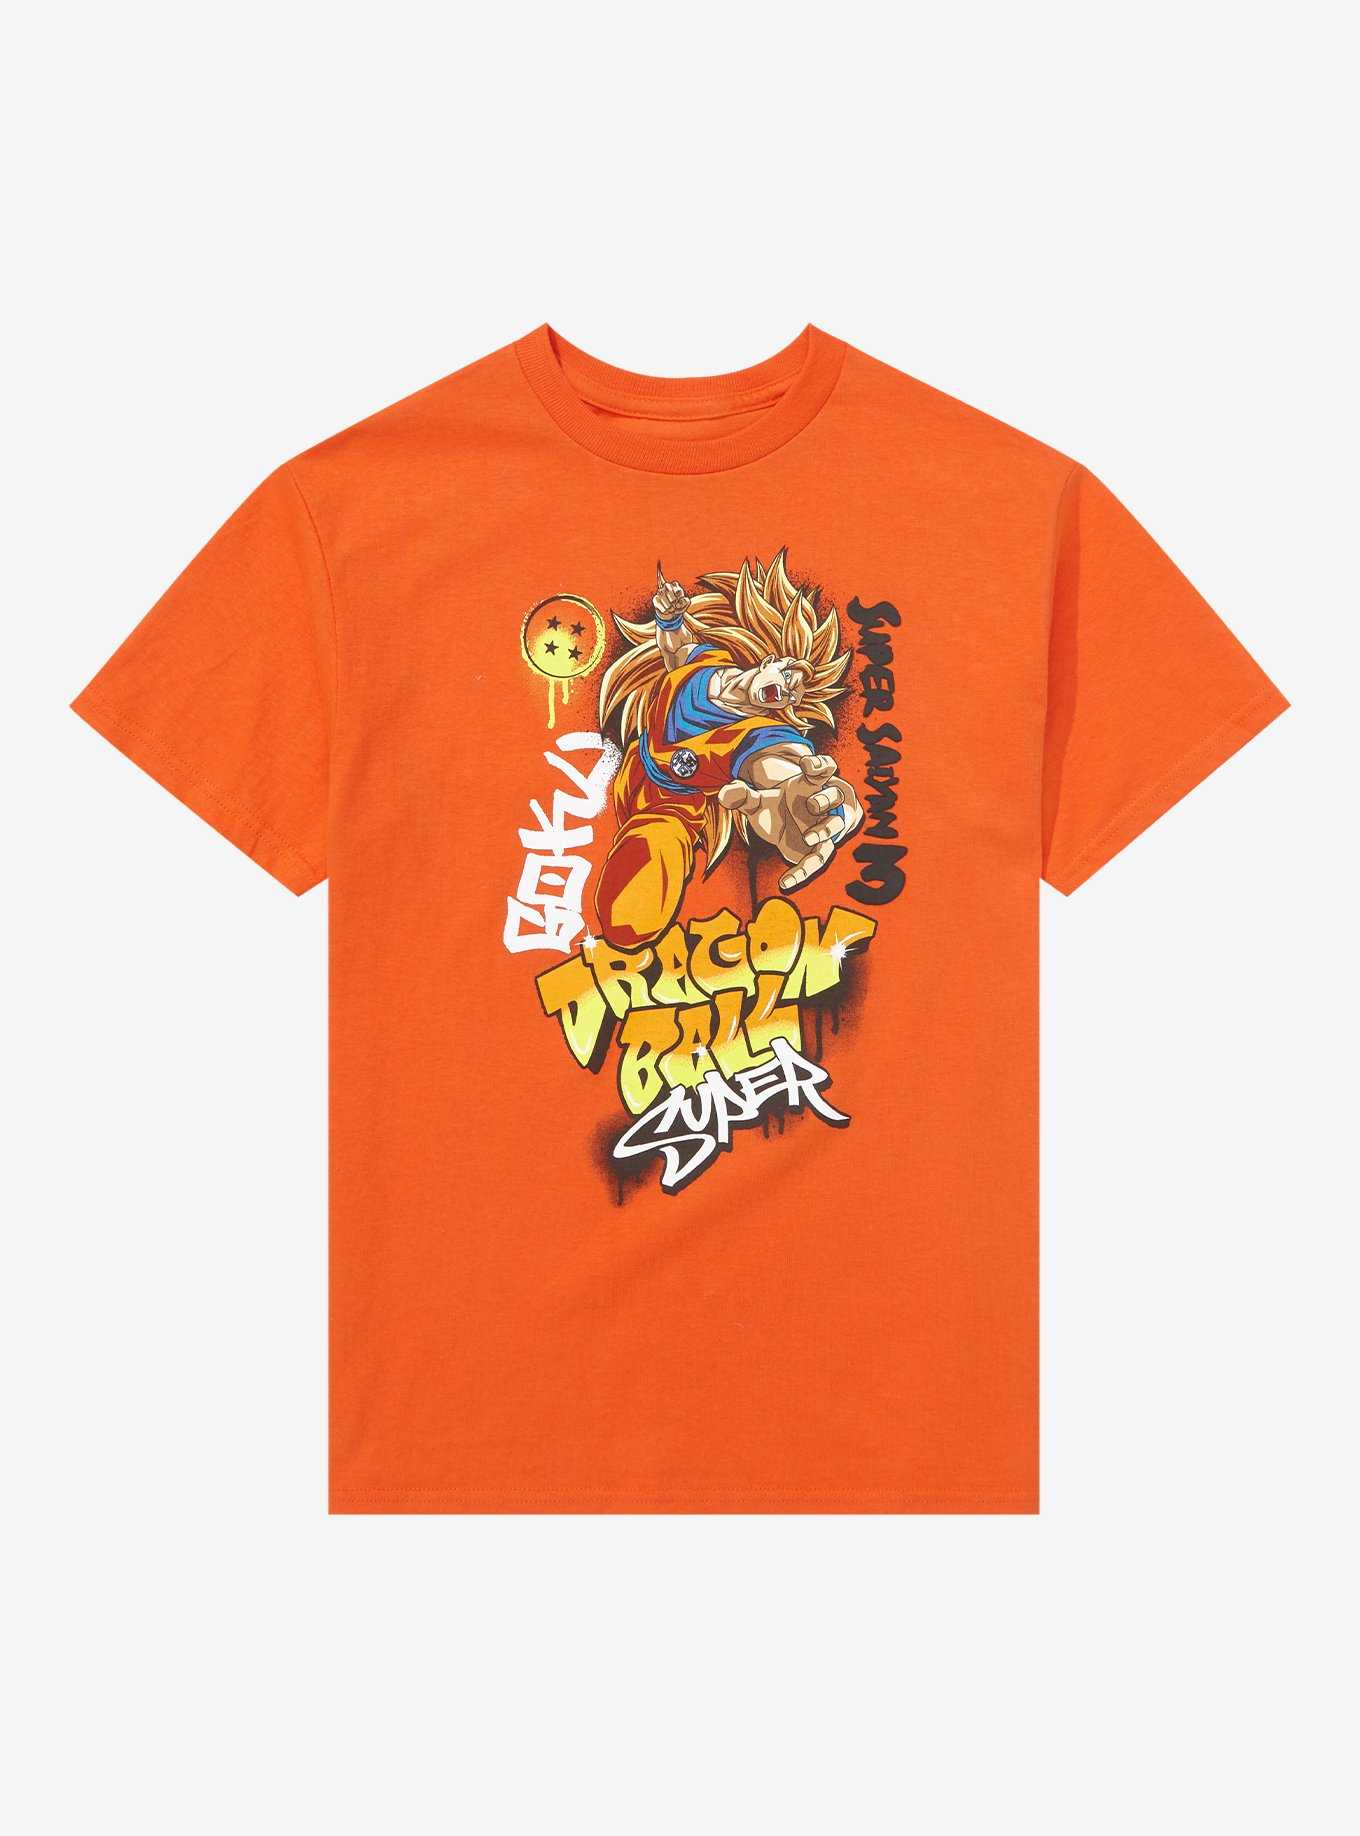 Dragon Ball Z Cell Saga Panel T-Shirt - BoxLunch Exclusive